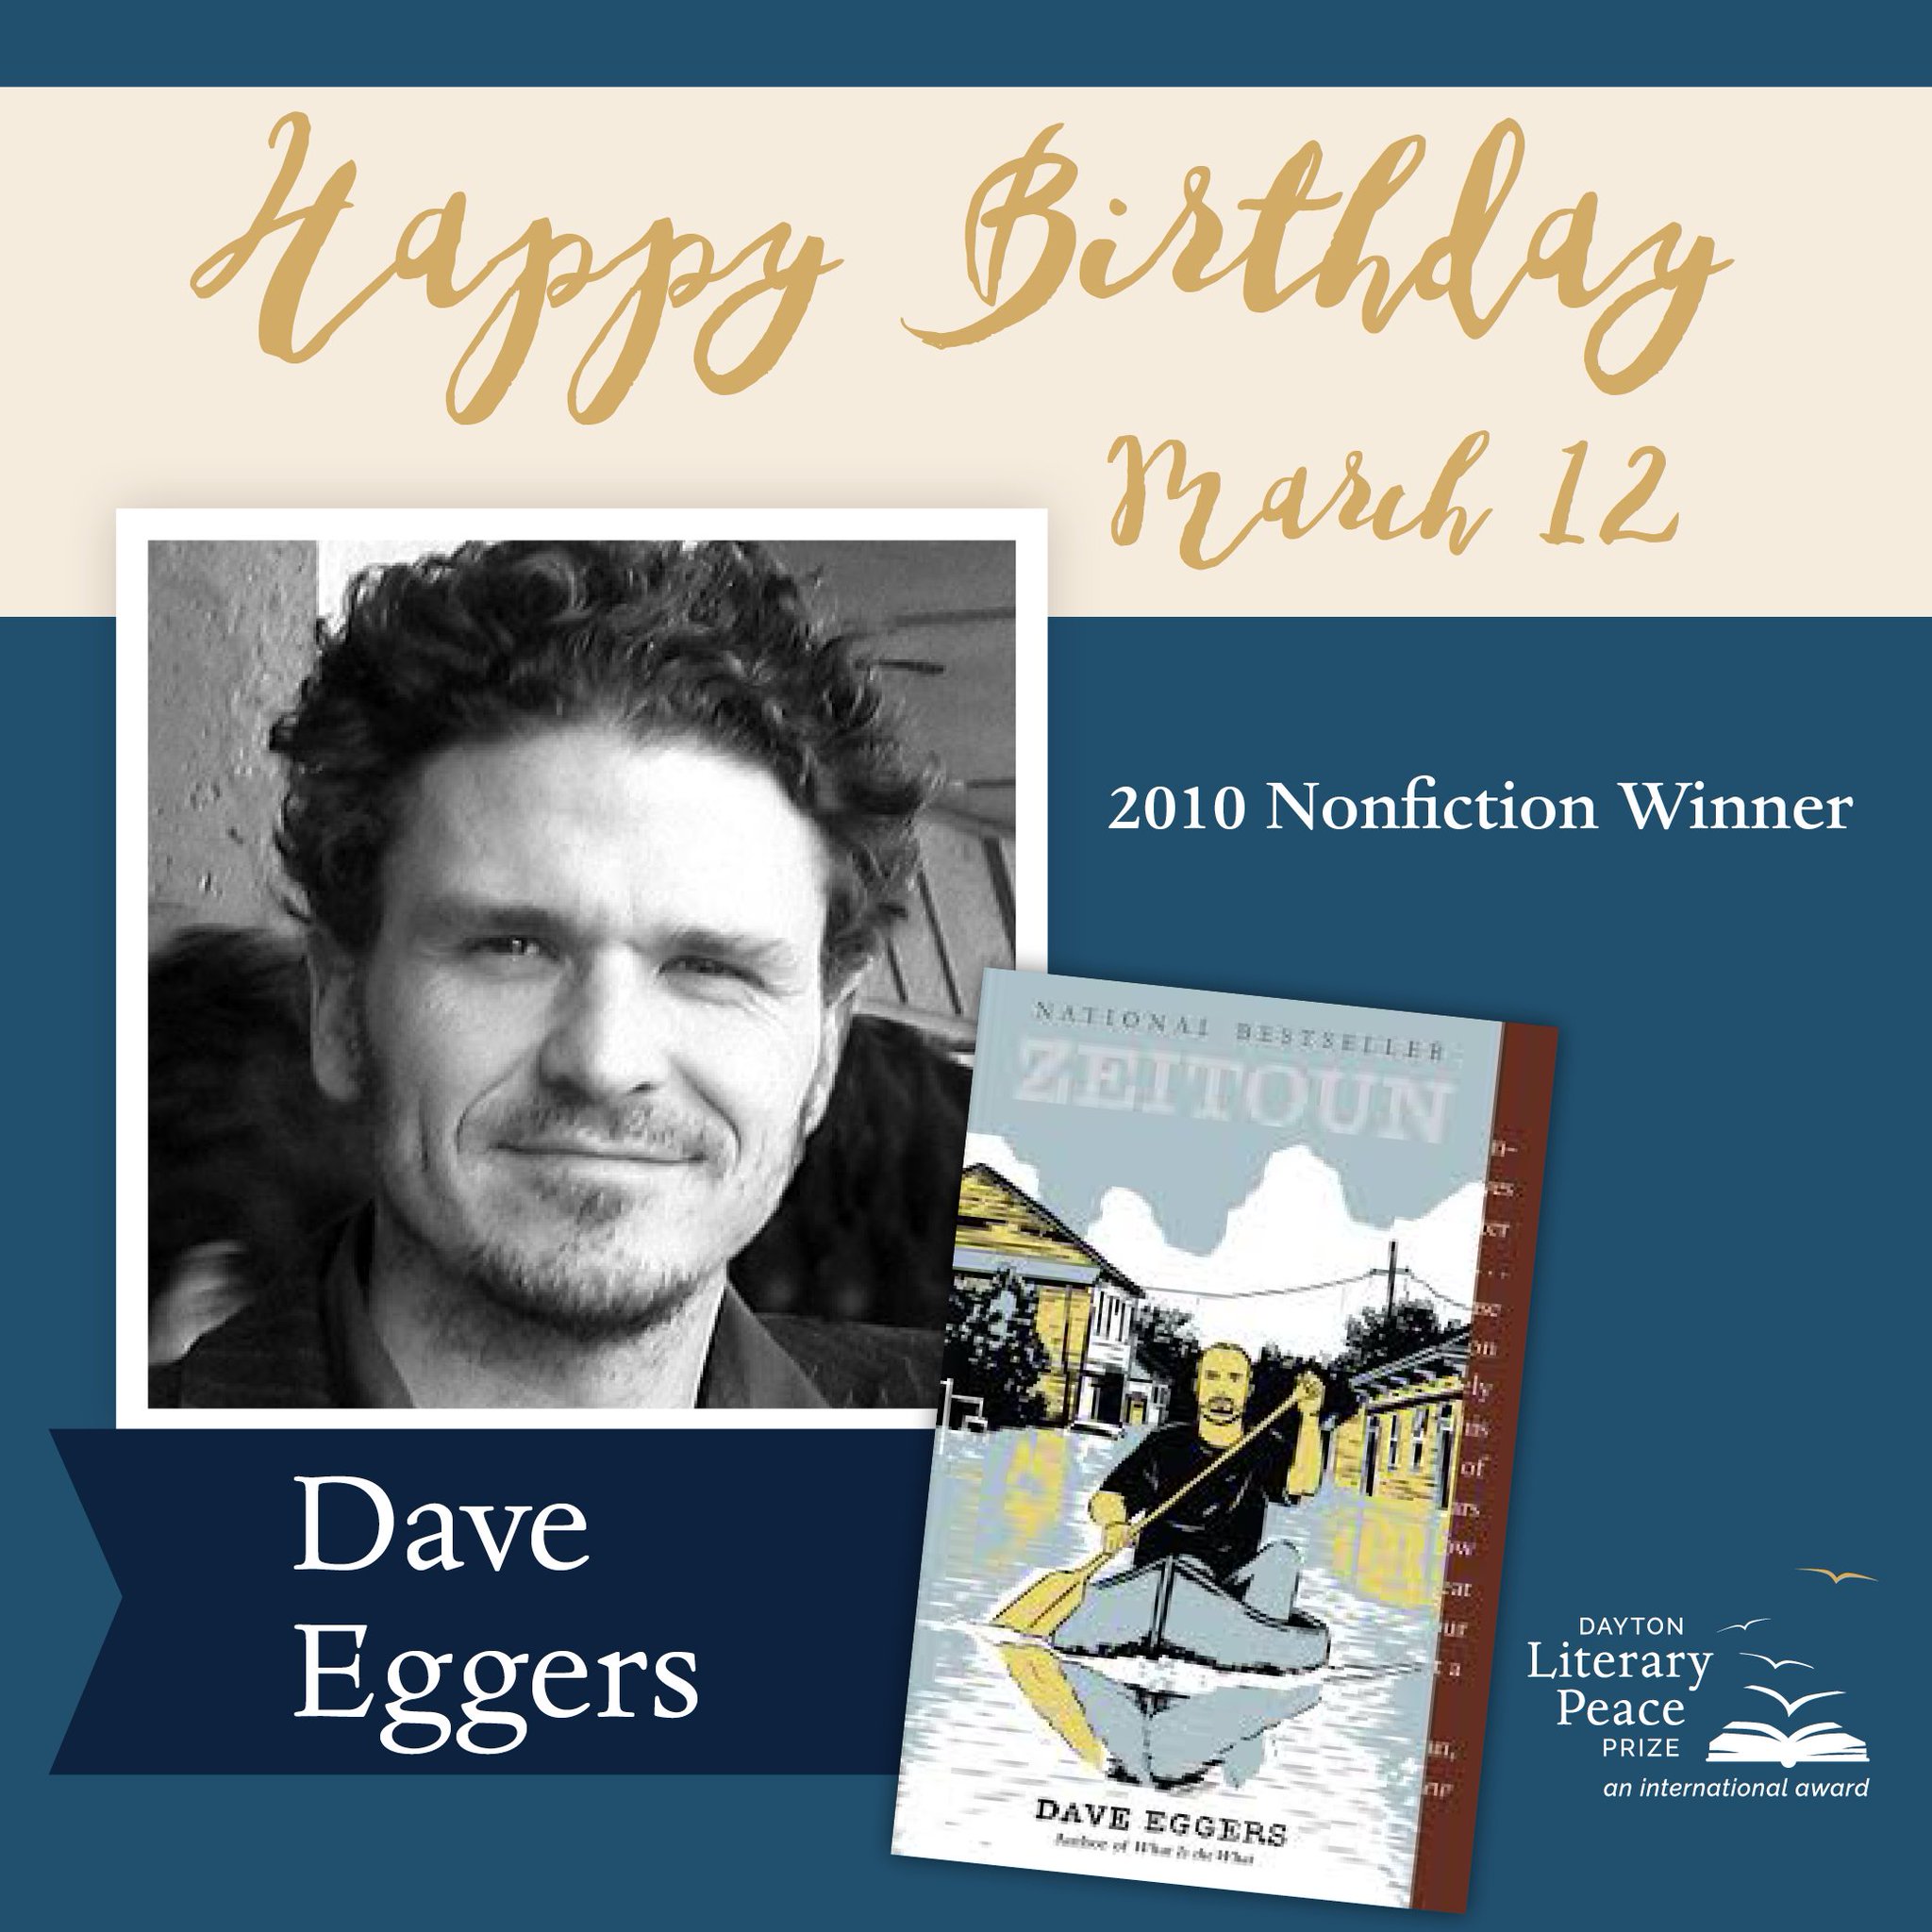 Happy birthday to 2010 Nonfiction Winner Dave Eggers!  